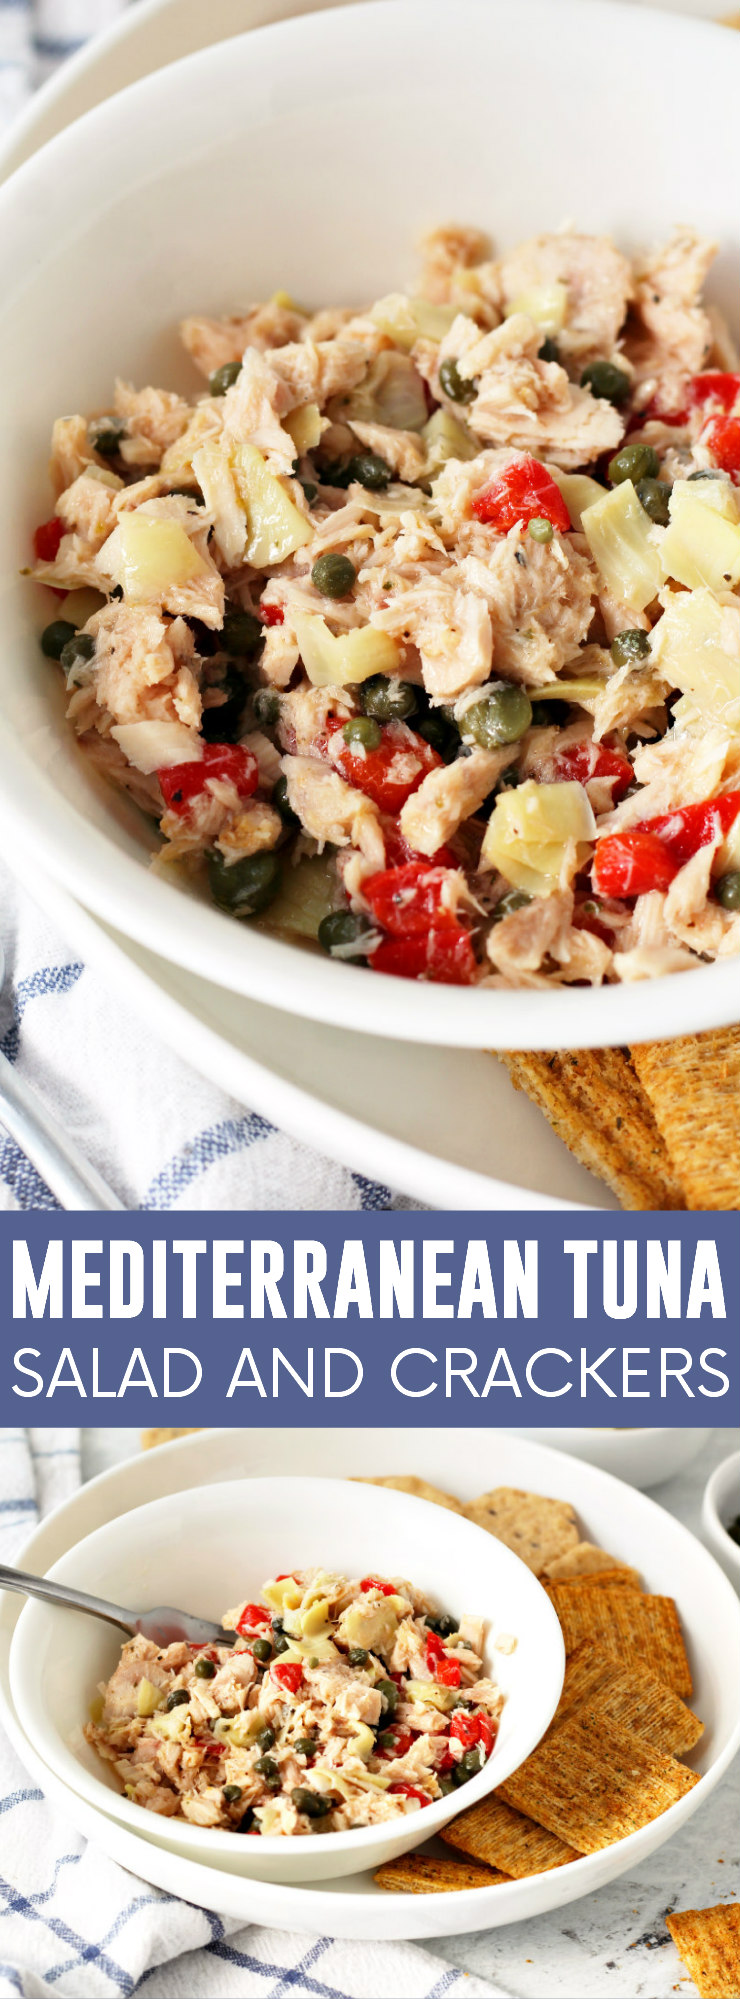 Mediterranean Tuna Salad and Crackers pinnable image.